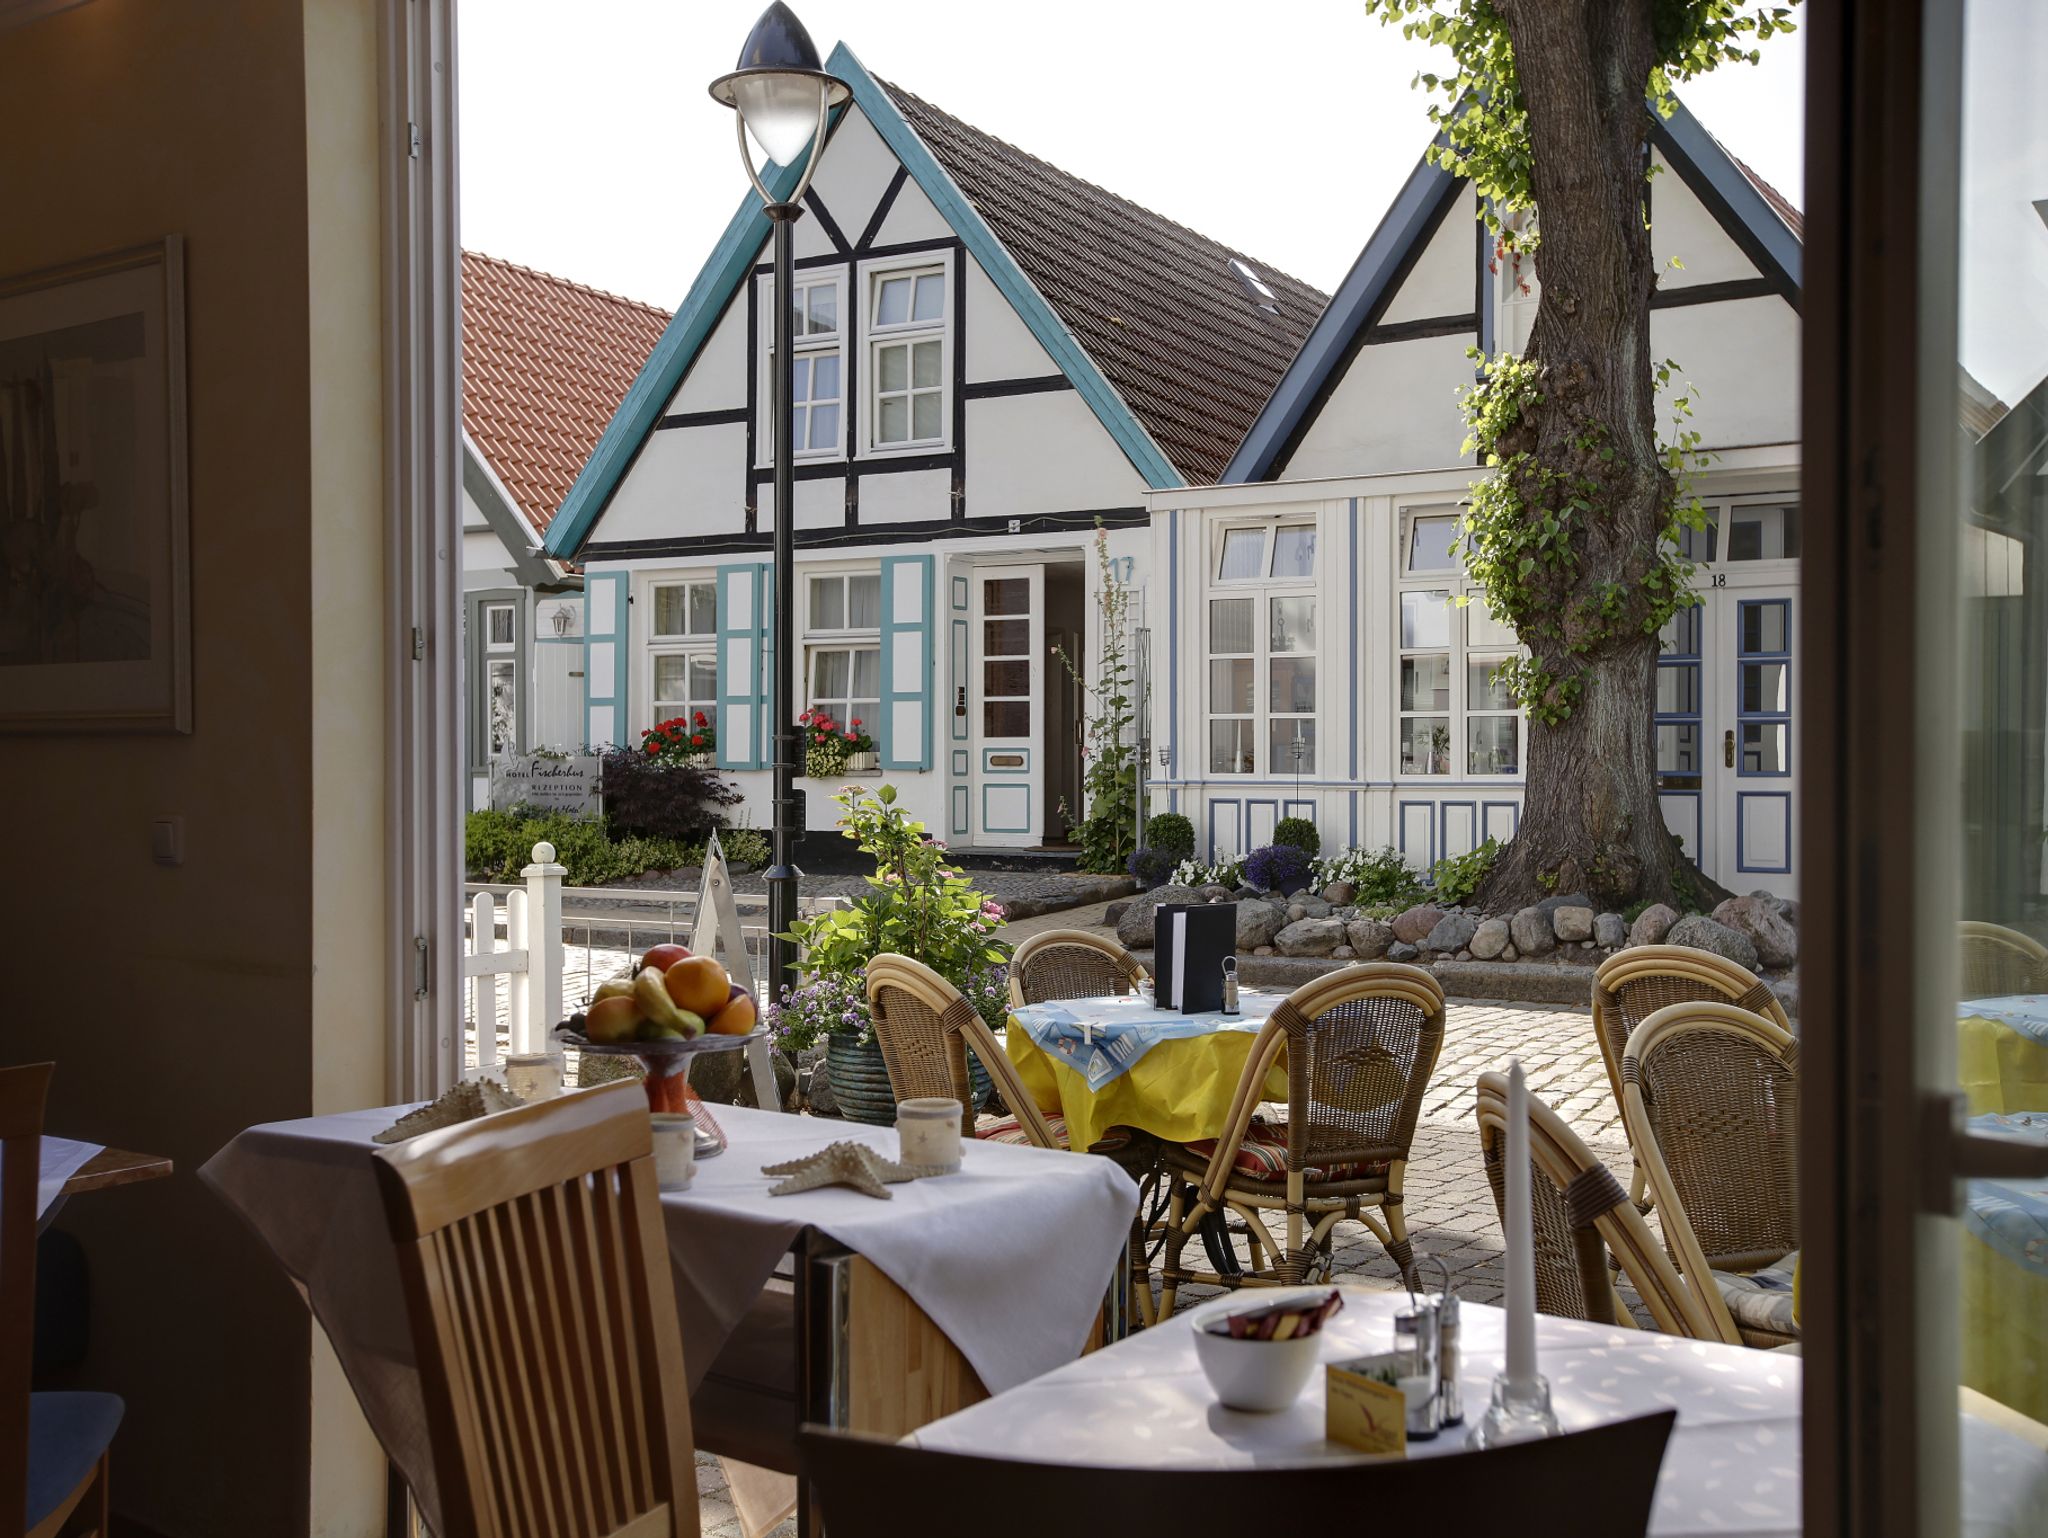 Hotel Astor Kiel by Campanile